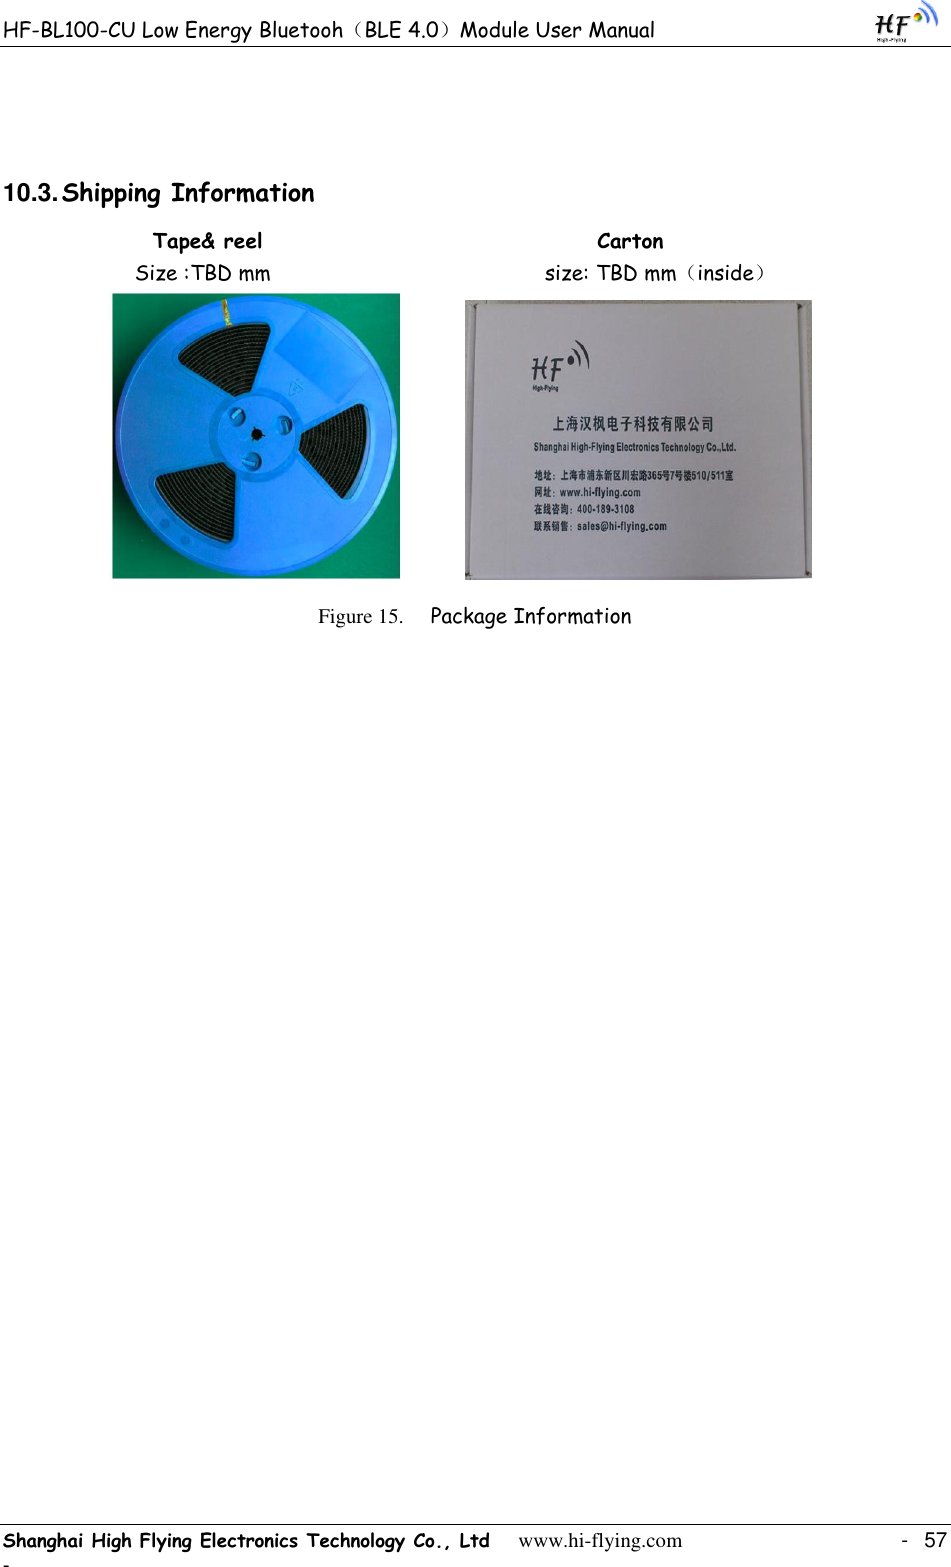 HF-BL100-CU Low Energy Bluetooh（BLE 4.0）Module User Manual Shanghai High Flying Electronics Technology Co., Ltd     www.hi-flying.com    -  57 -  10.3. Shipping Information               Tape&amp; reel                                     Carton                  Size :TBD mm                                            size: TBD mm（inside）                        Figure 15. Package Information 